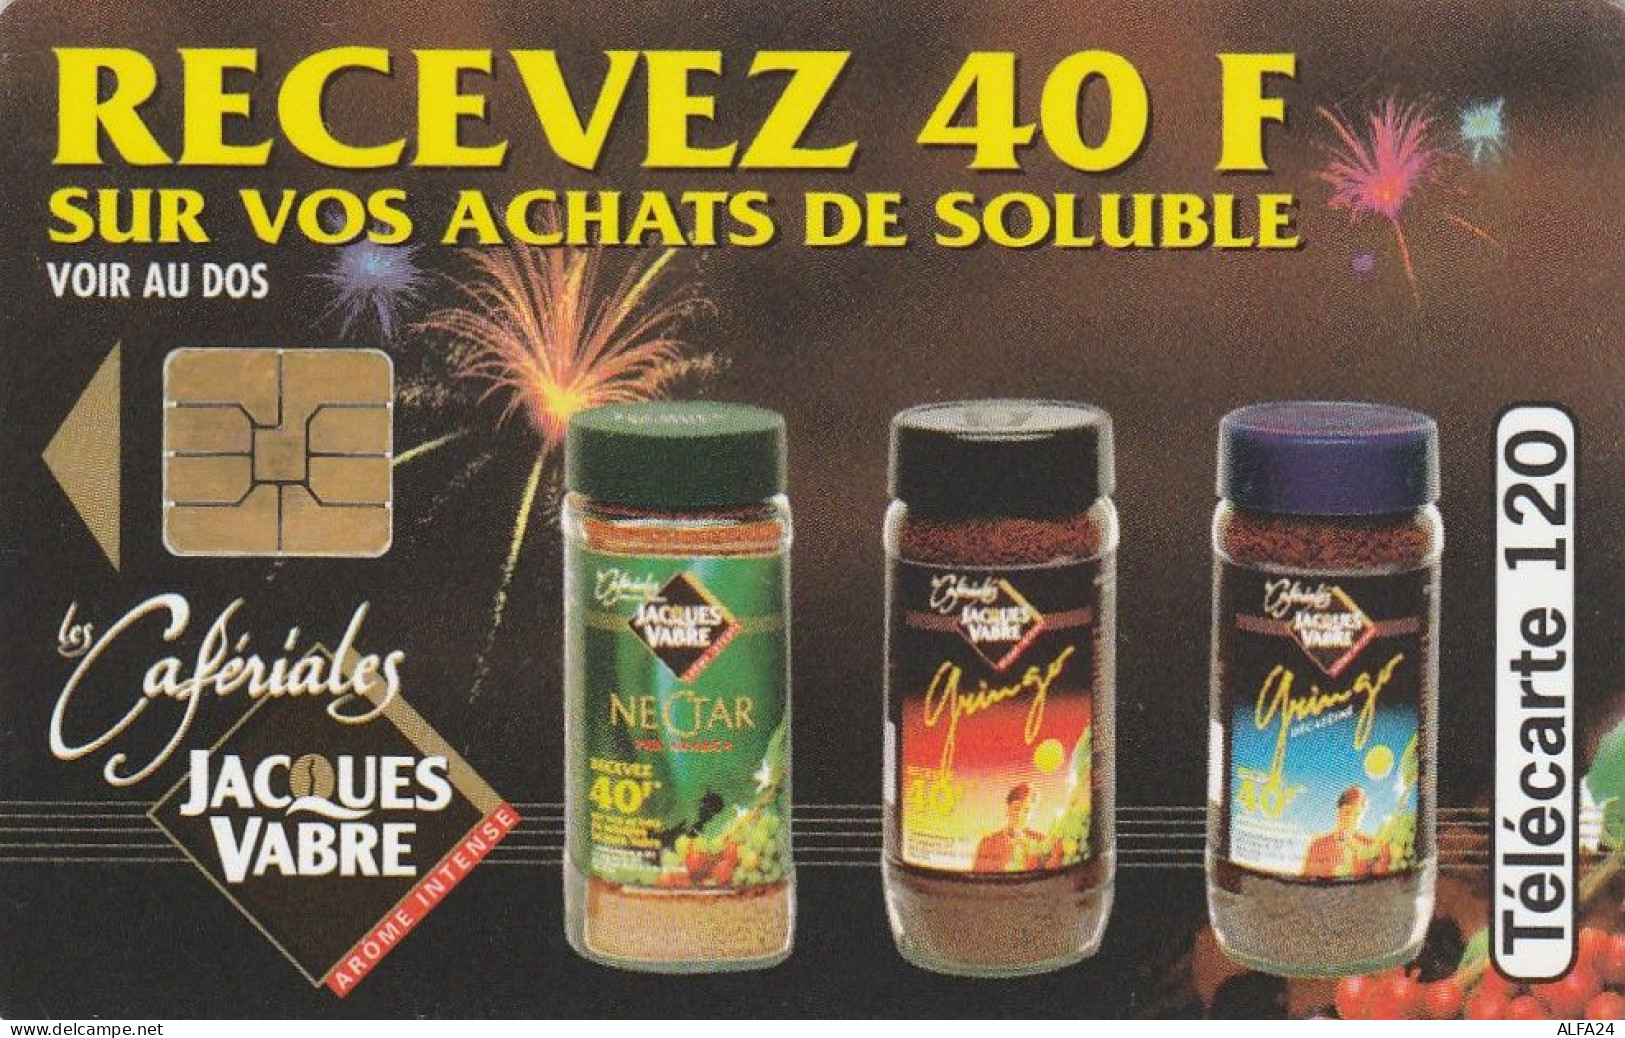 TELECARTE F470 CAFERALIES VABRE - 1994